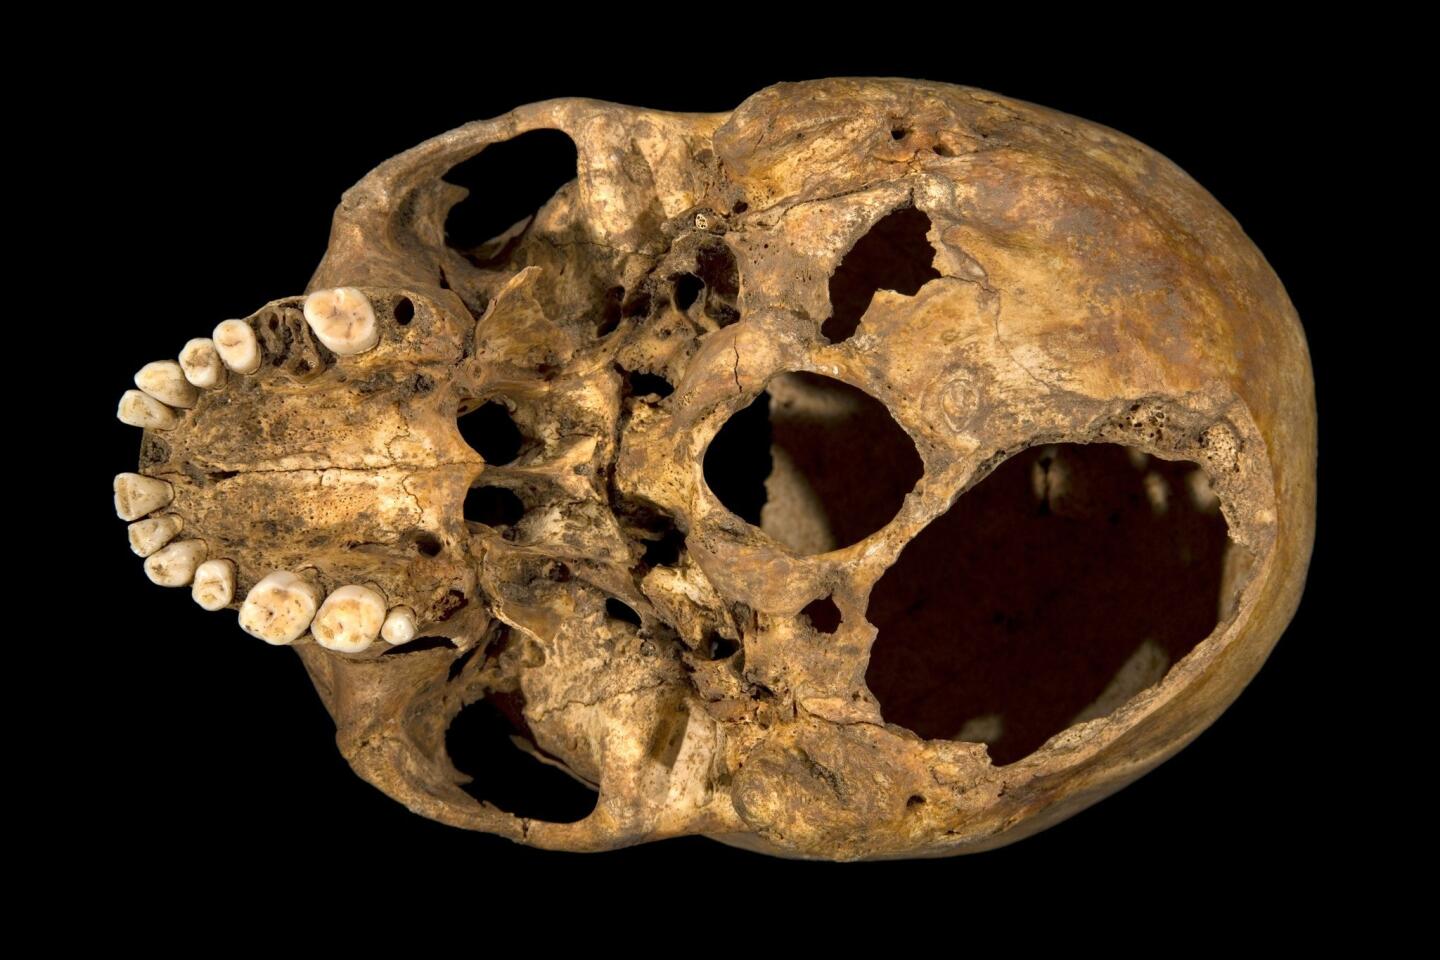 Fatal injuries on Richard III's skull